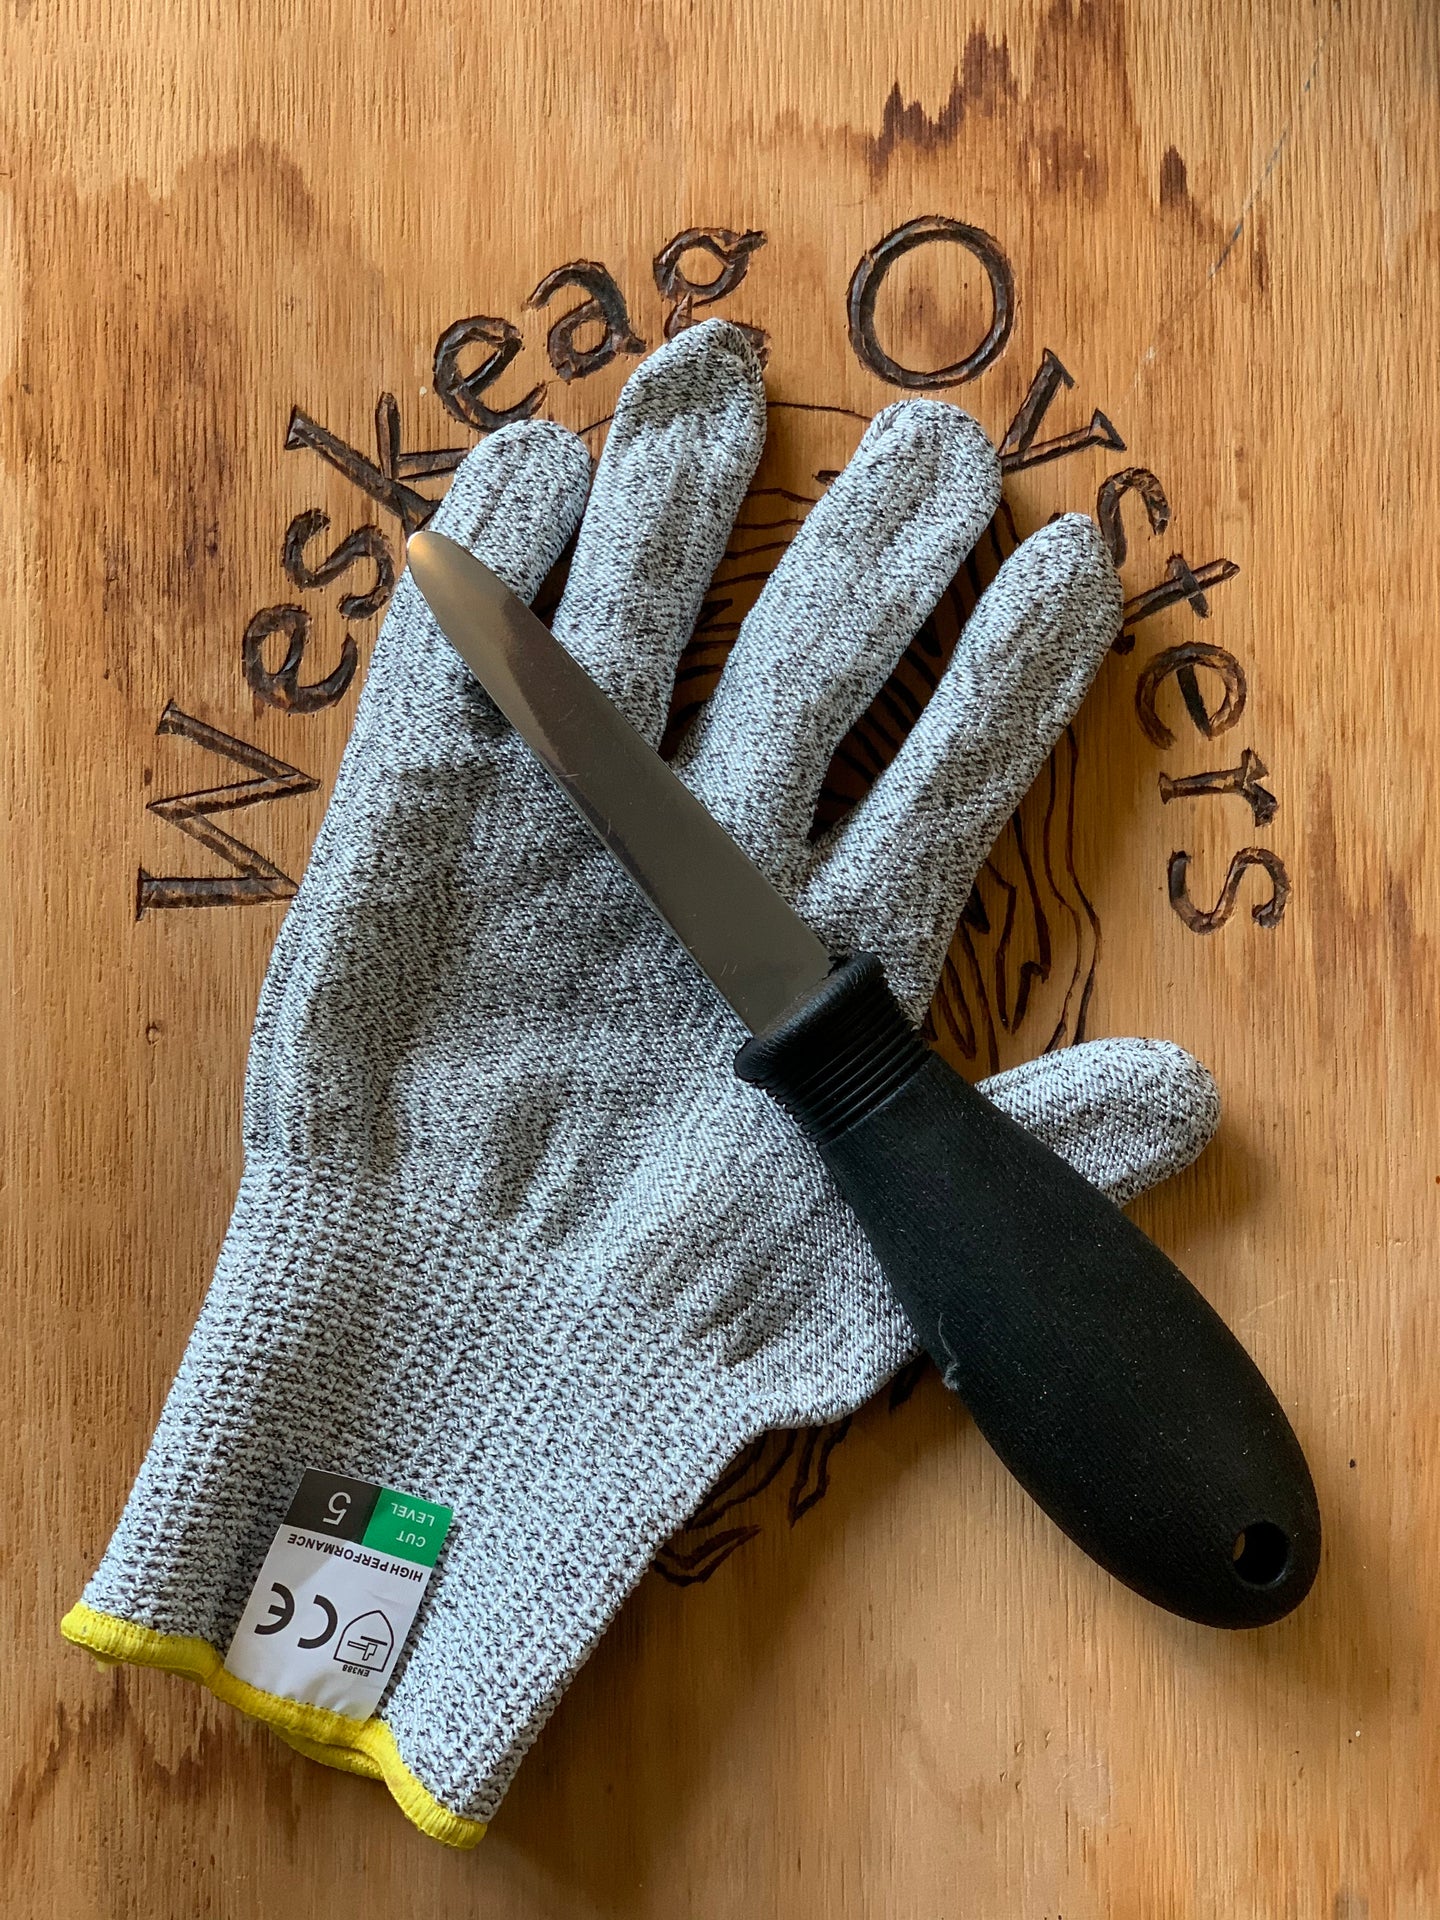 Oyster Shucking Knives And Gloves Set, Oyster Shucker Opener Kit